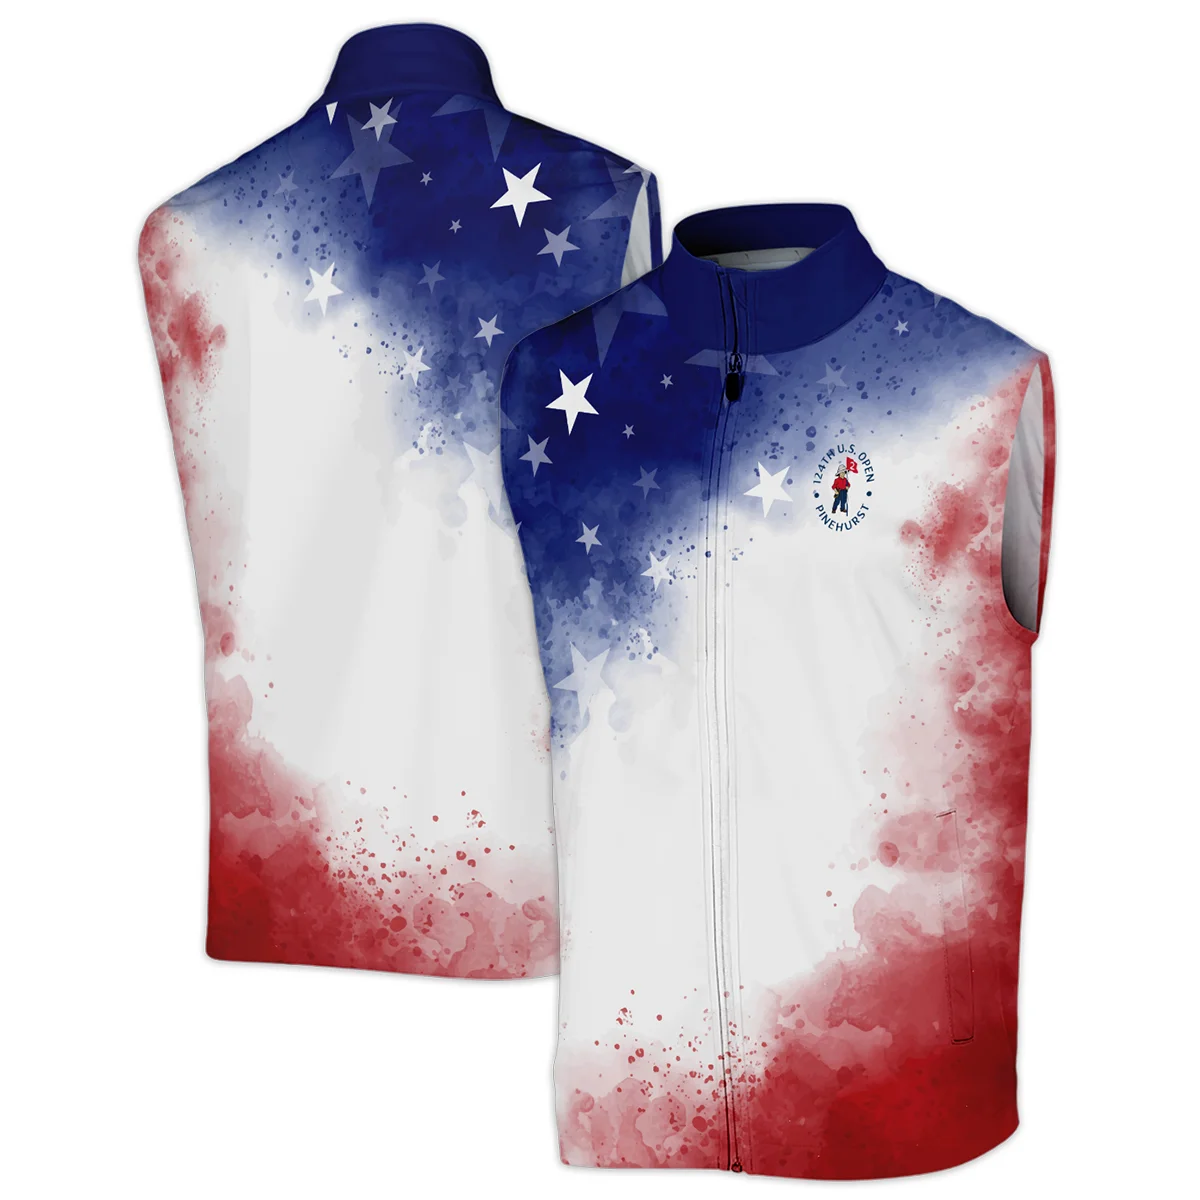 124th U.S. Open Pinehurst Callaway Blue Red Watercolor Star White Backgound Unisex T-Shirt Style Classic T-Shirt